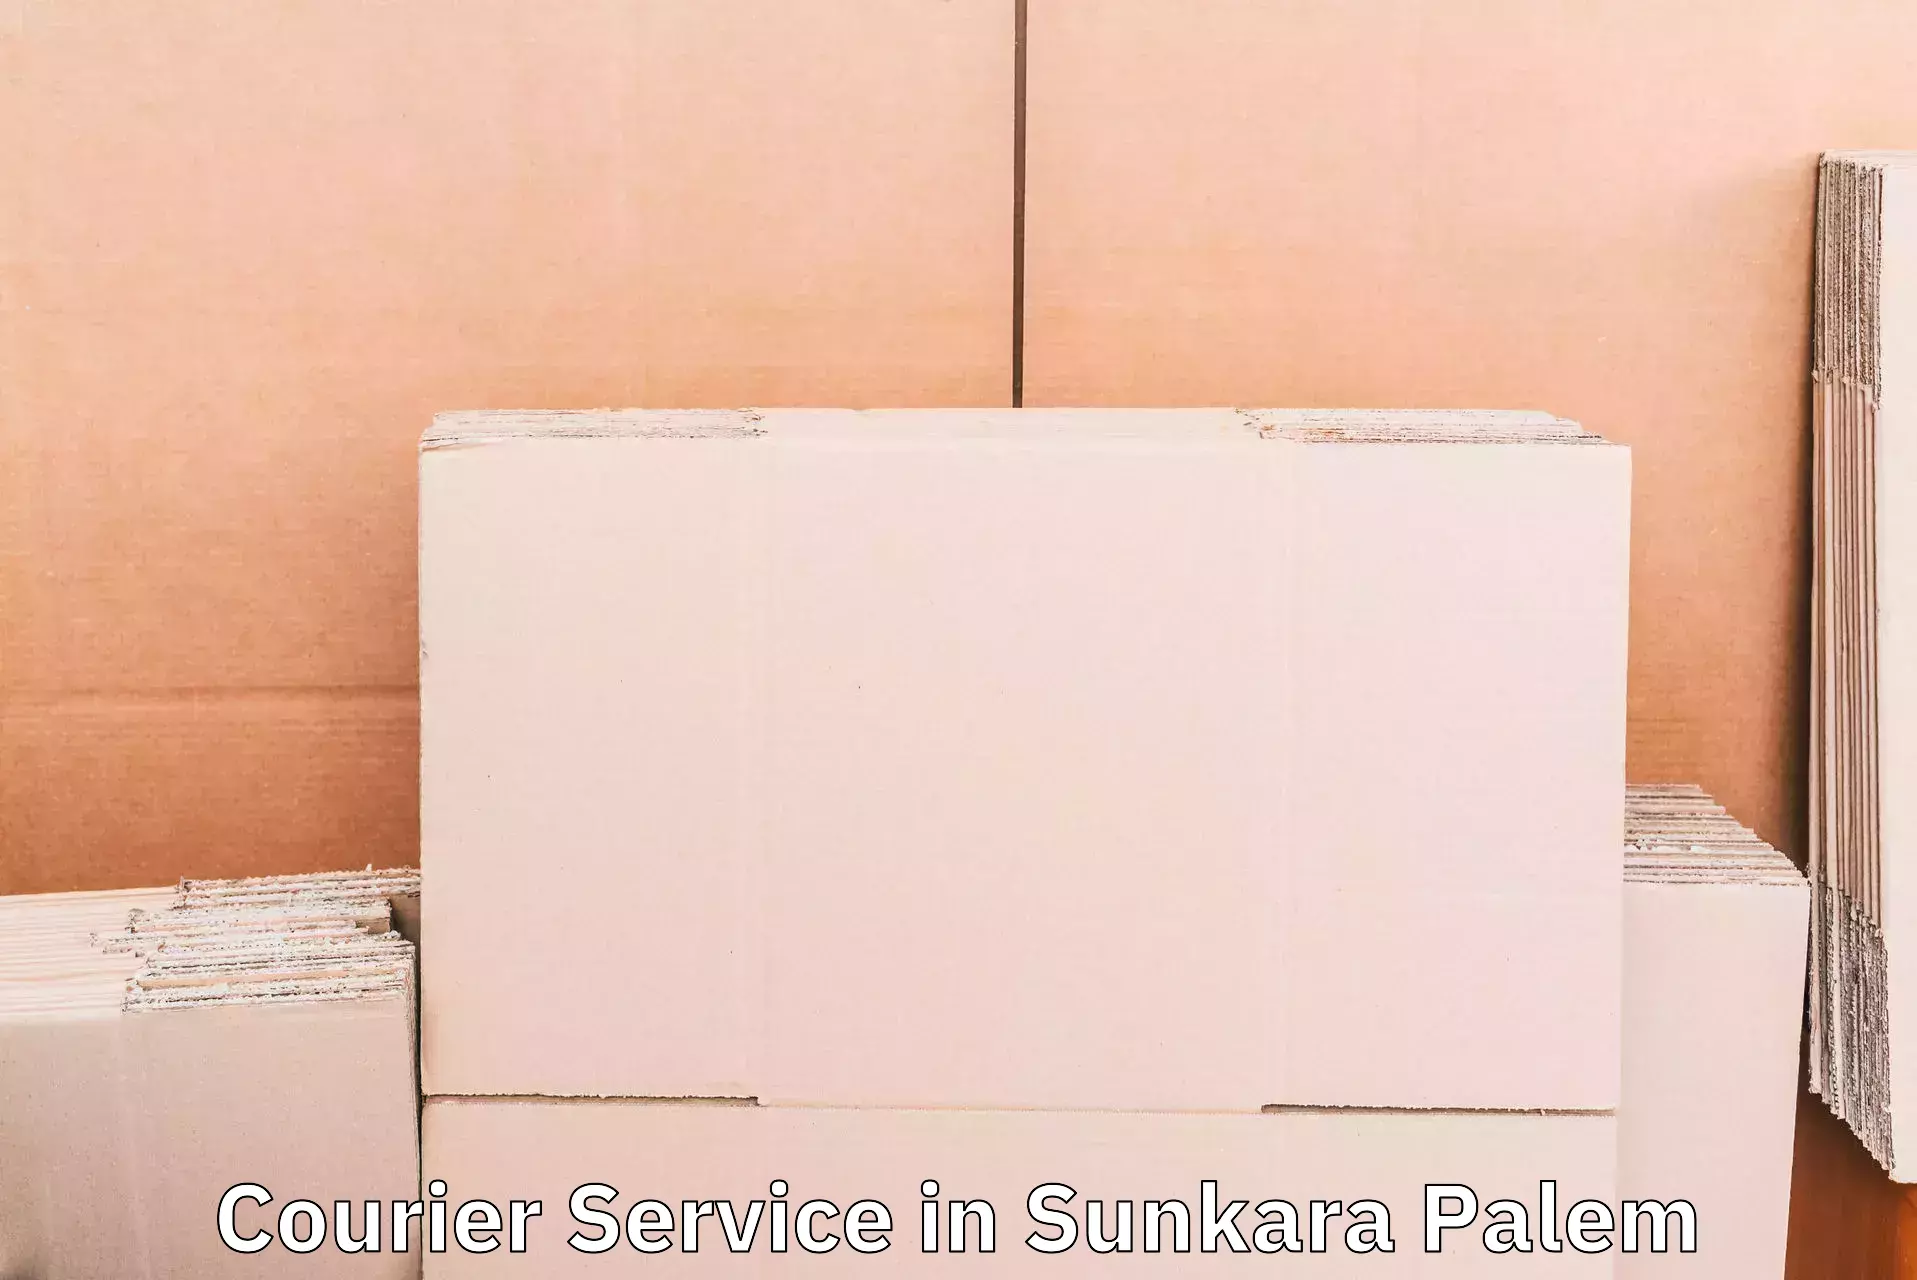 Efficient parcel transport in Sunkara Palem